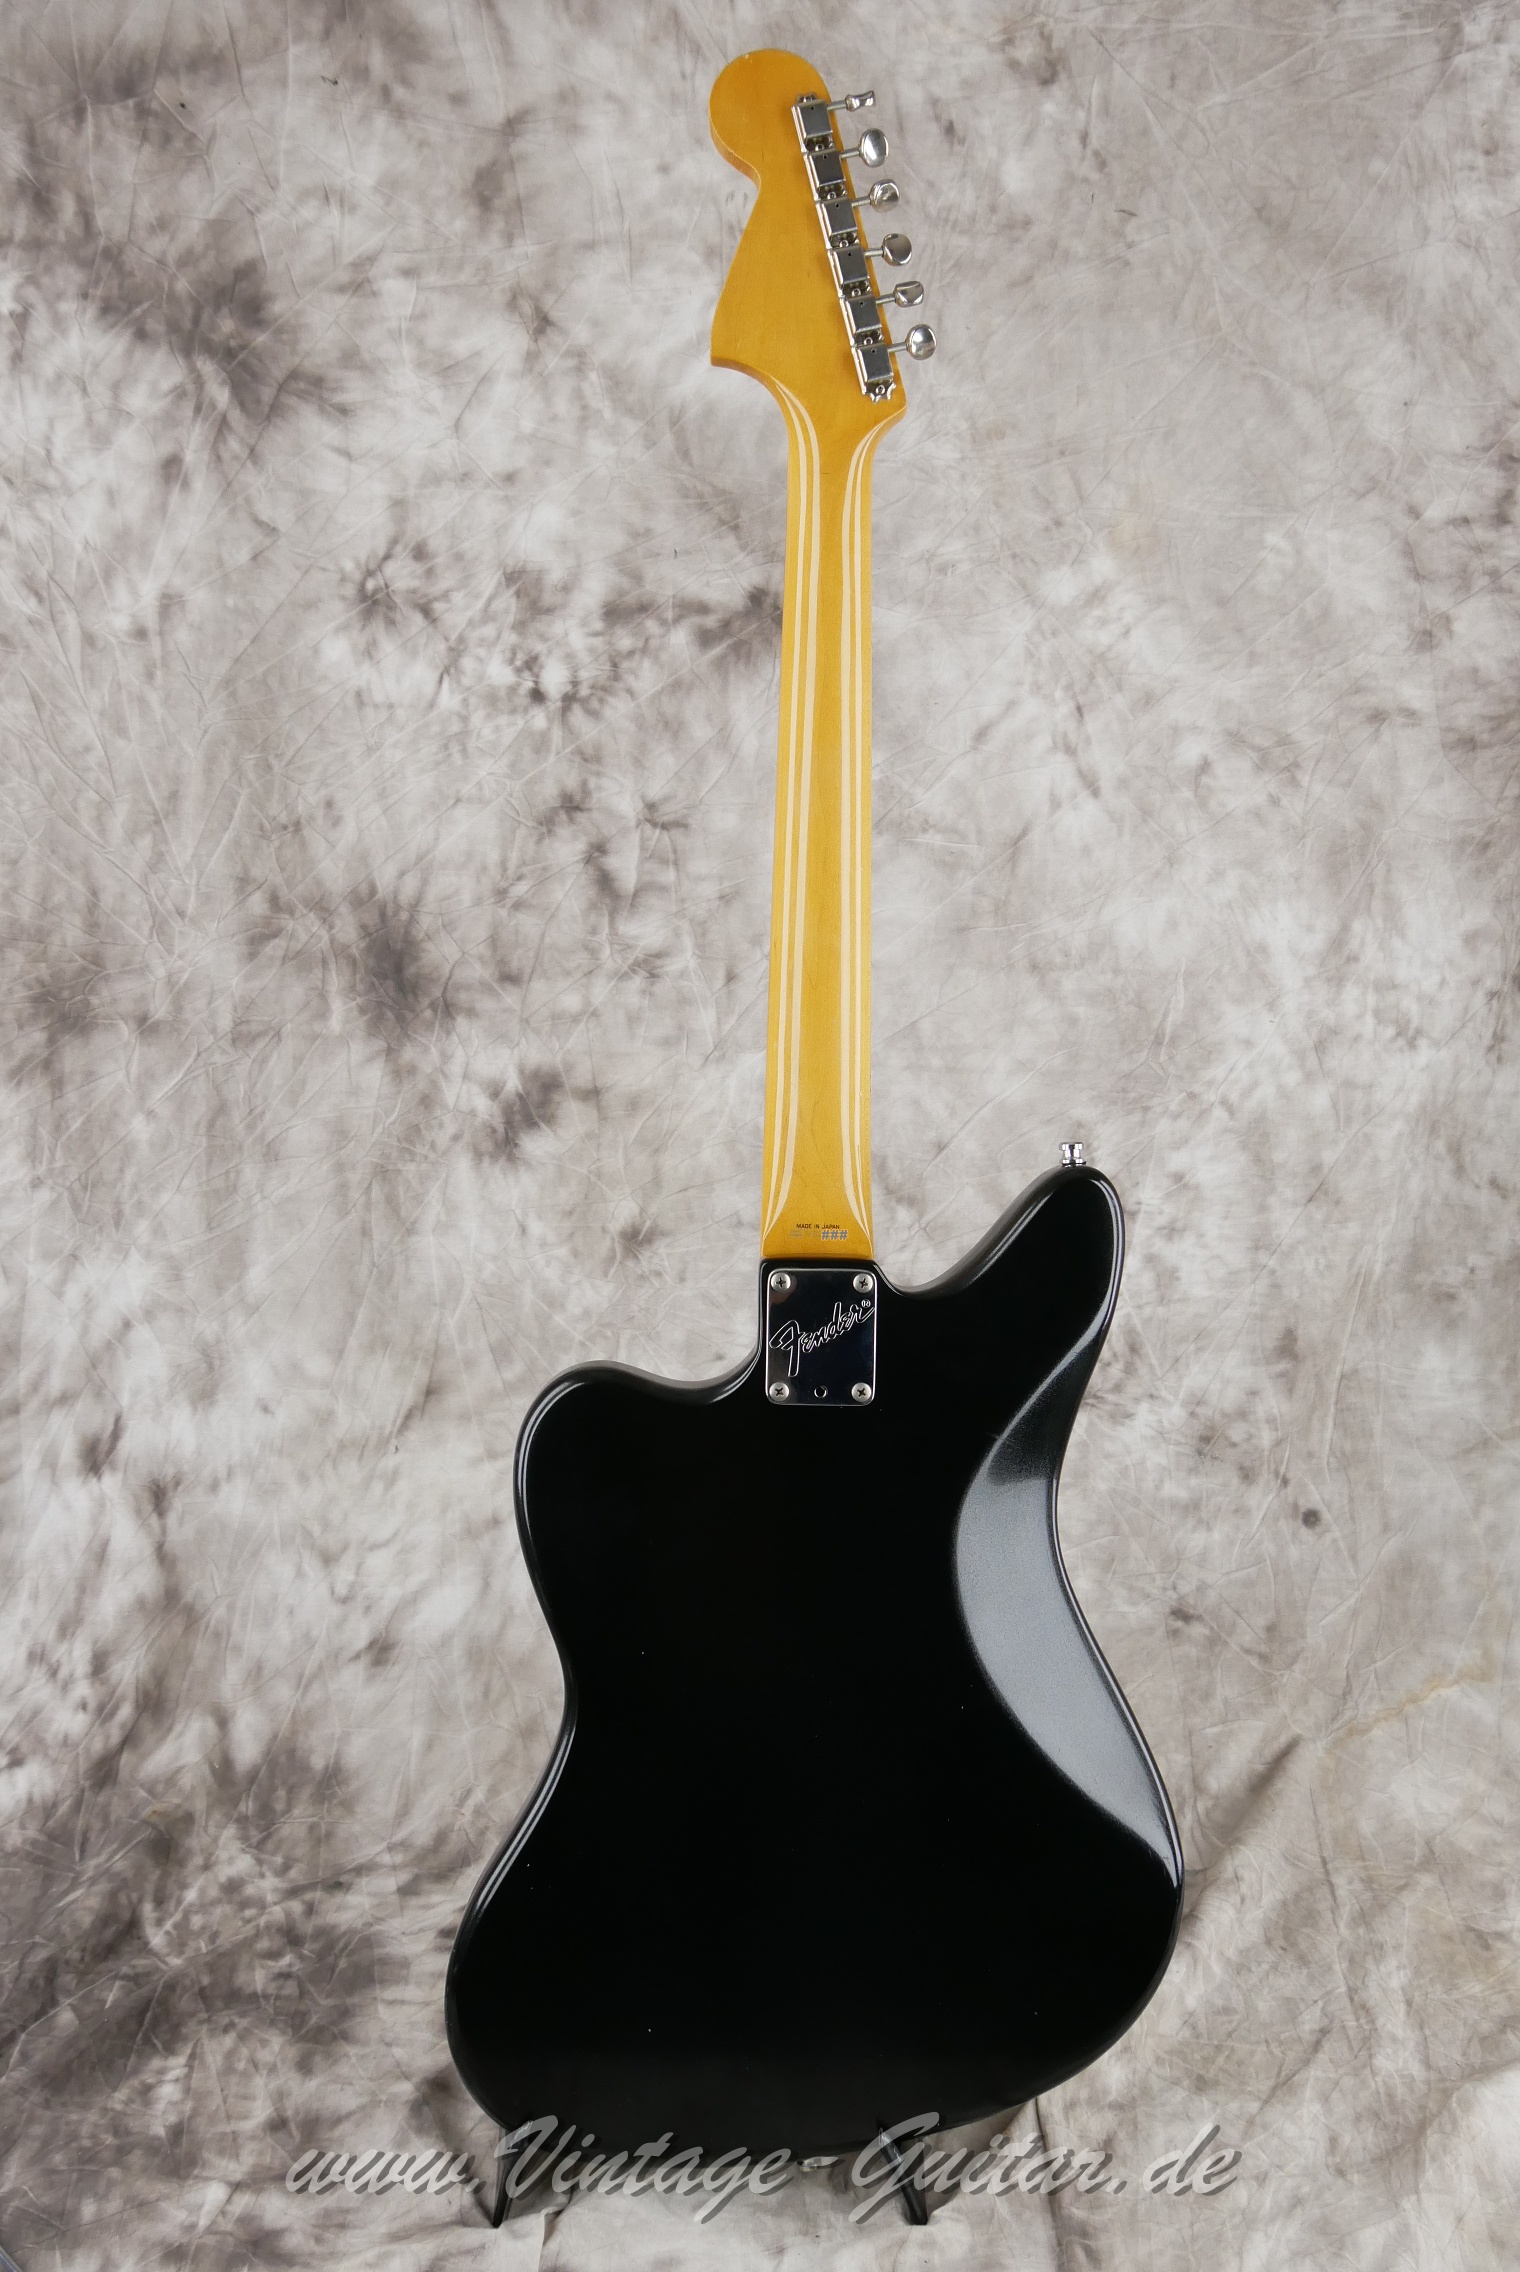 Fender_Jaguar_62RI_Japan_black_1996-002.JPG